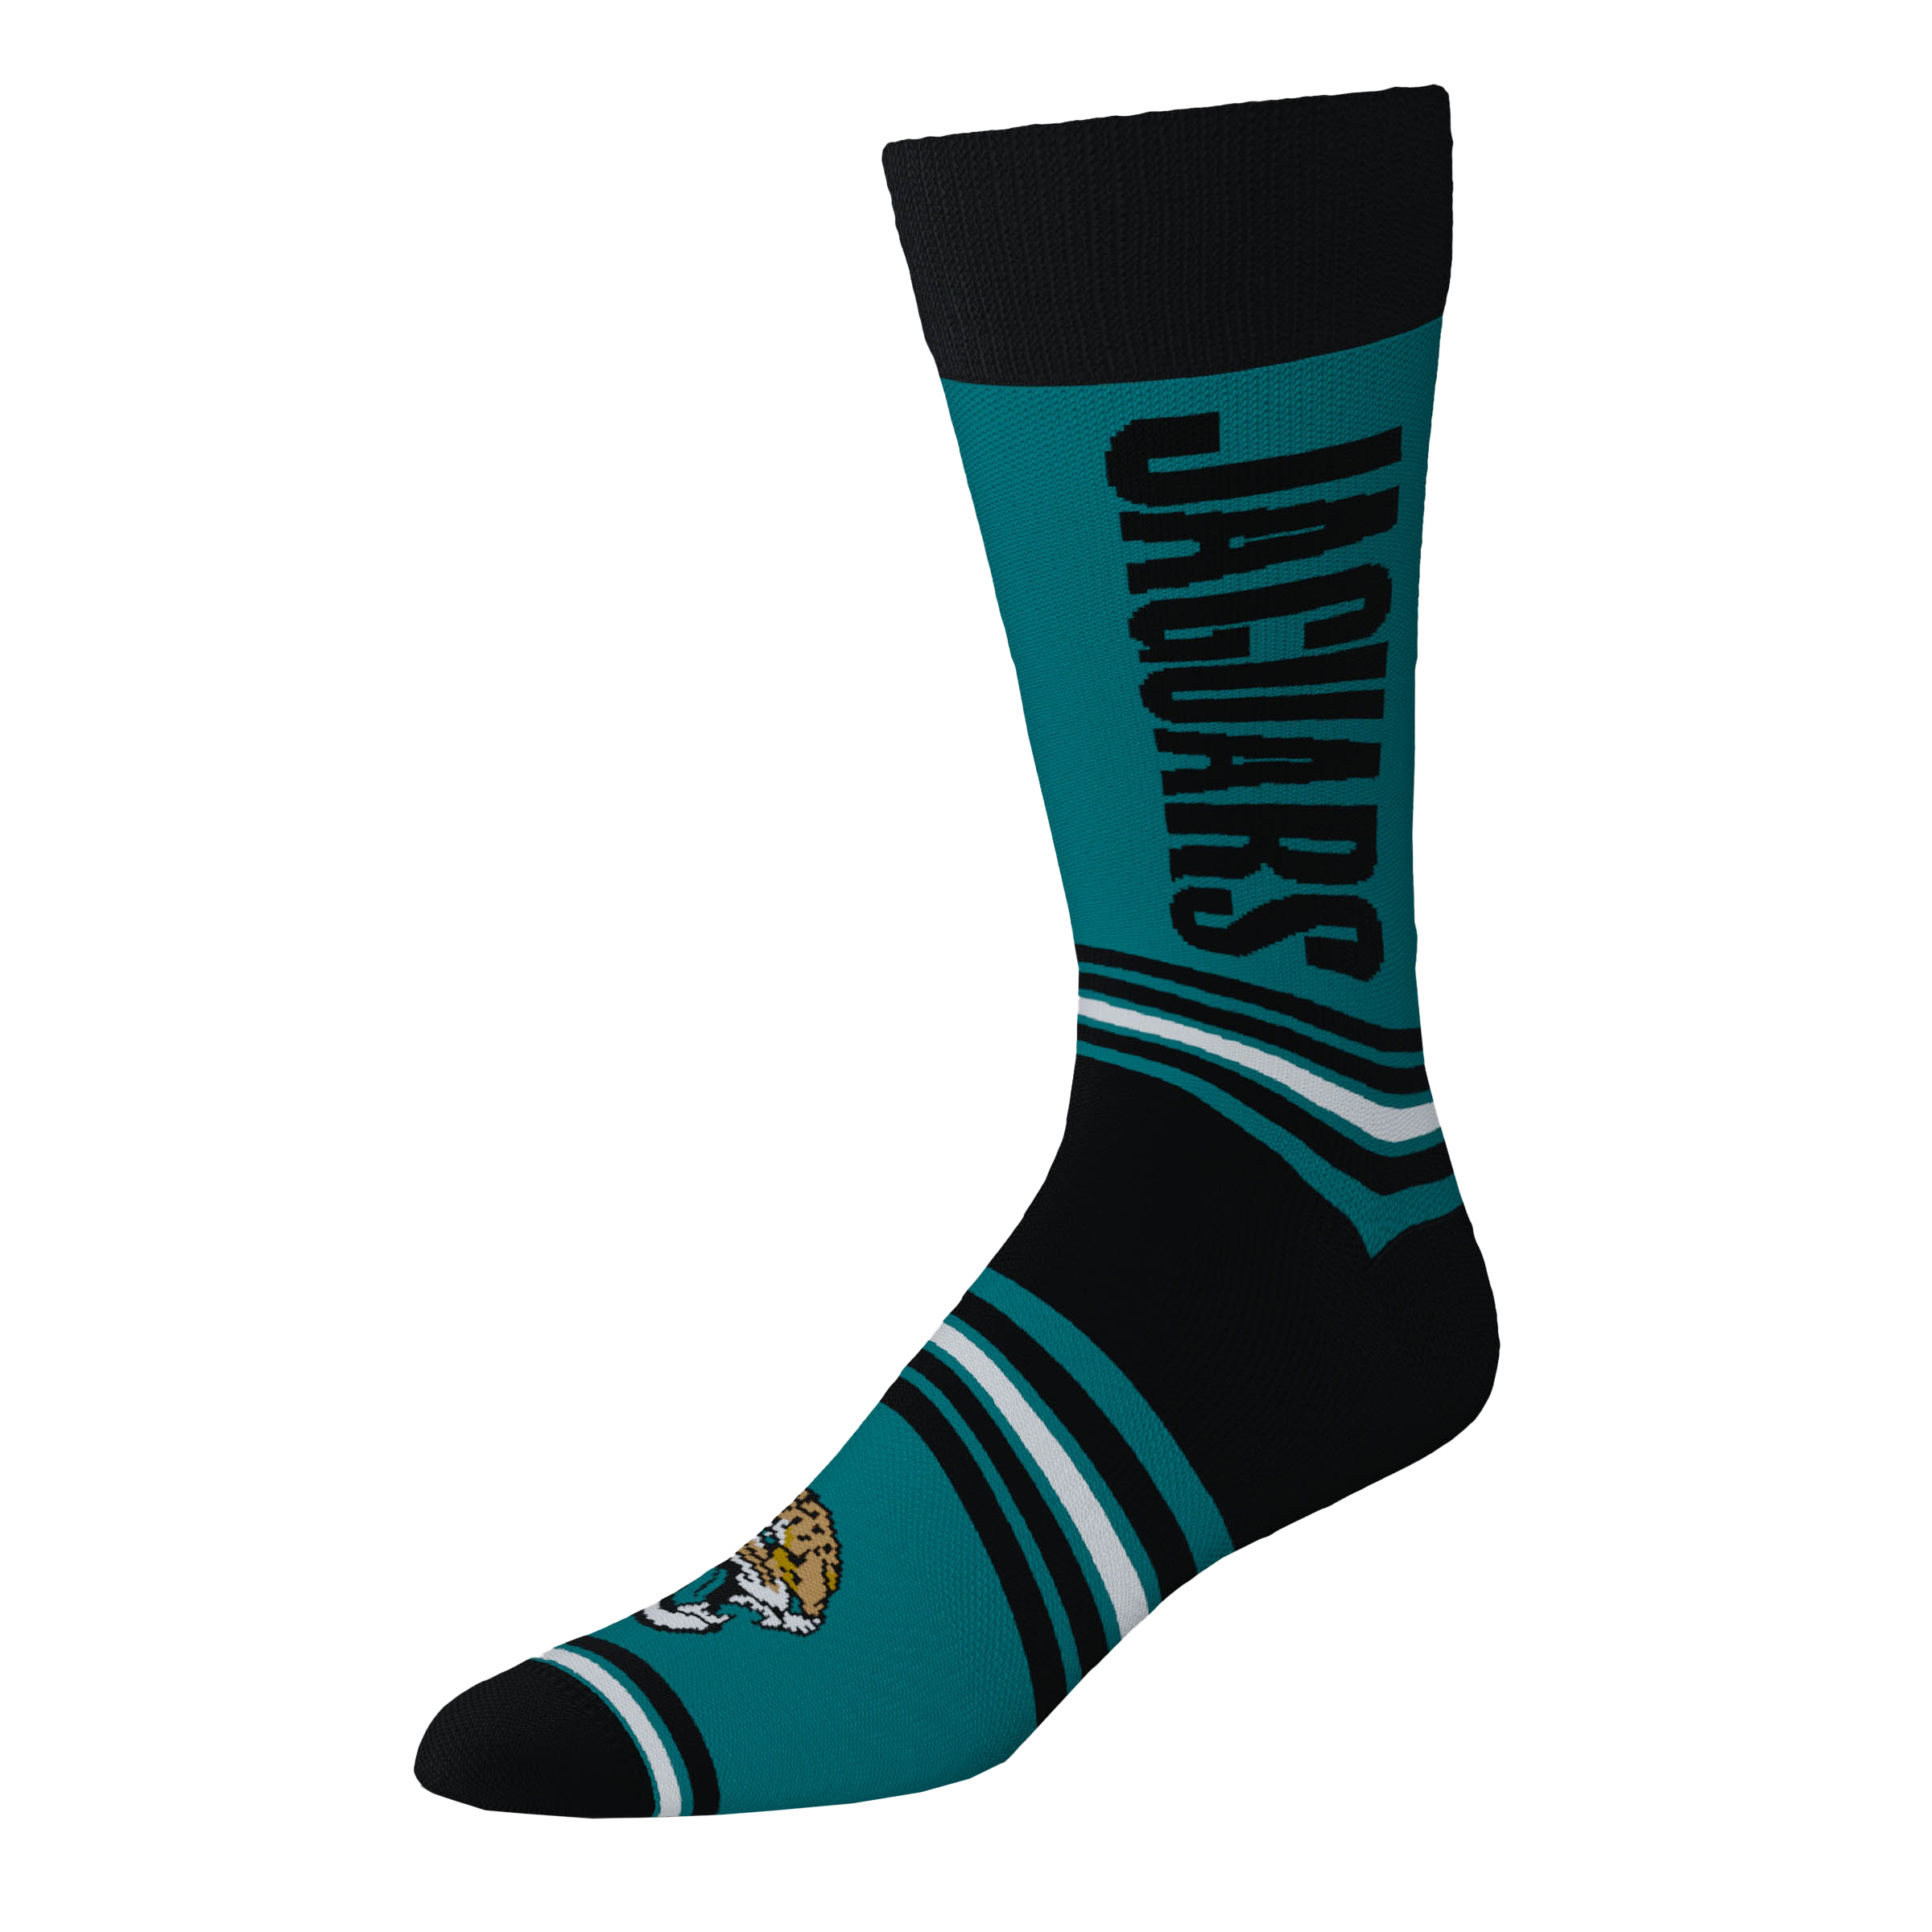 Pro Compression MLB Compression Socks, Pittsburgh Pirates - Classic Stripe, L/XL